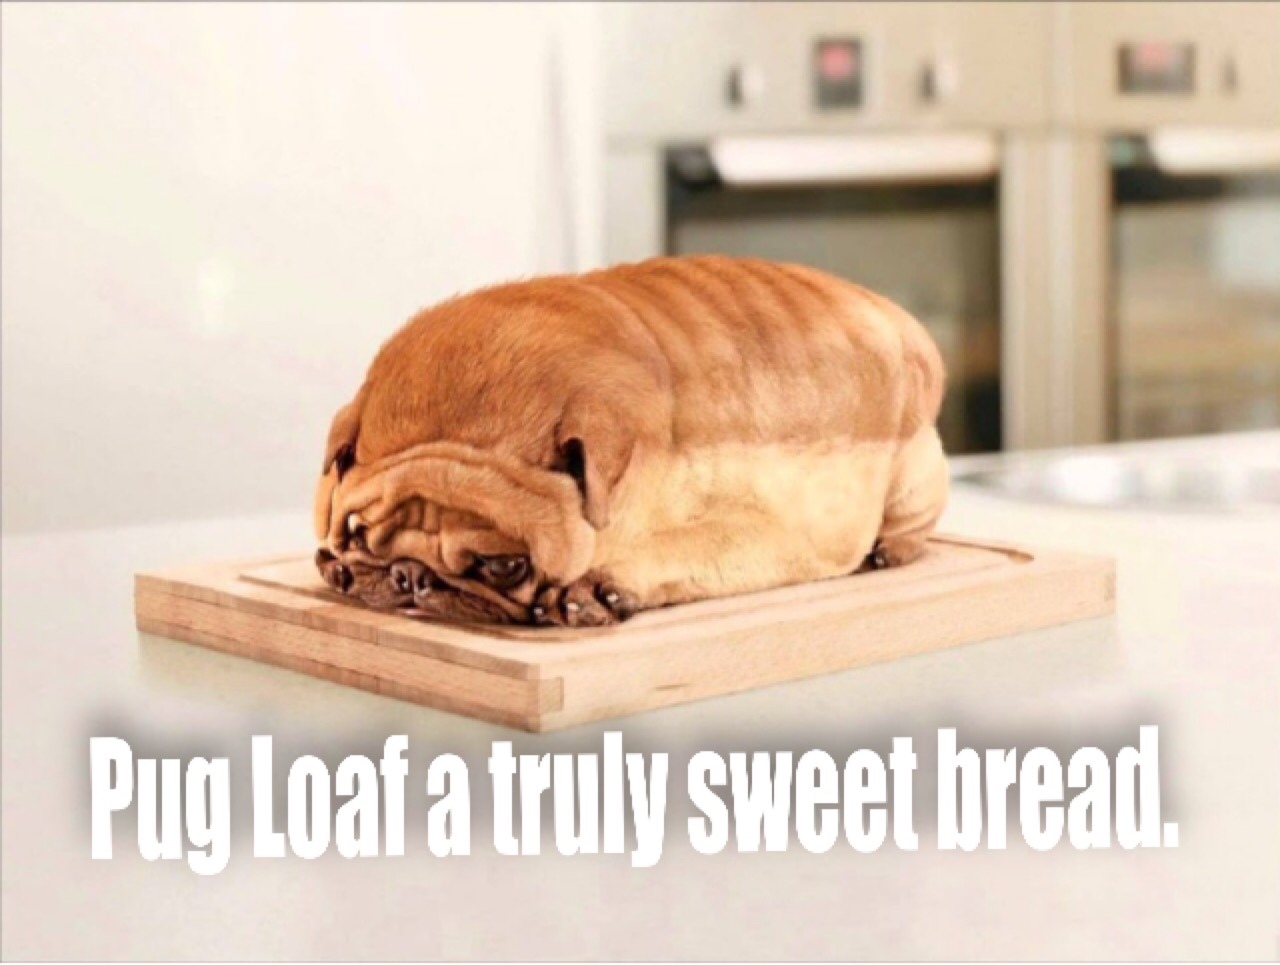 Pug be bread - meme